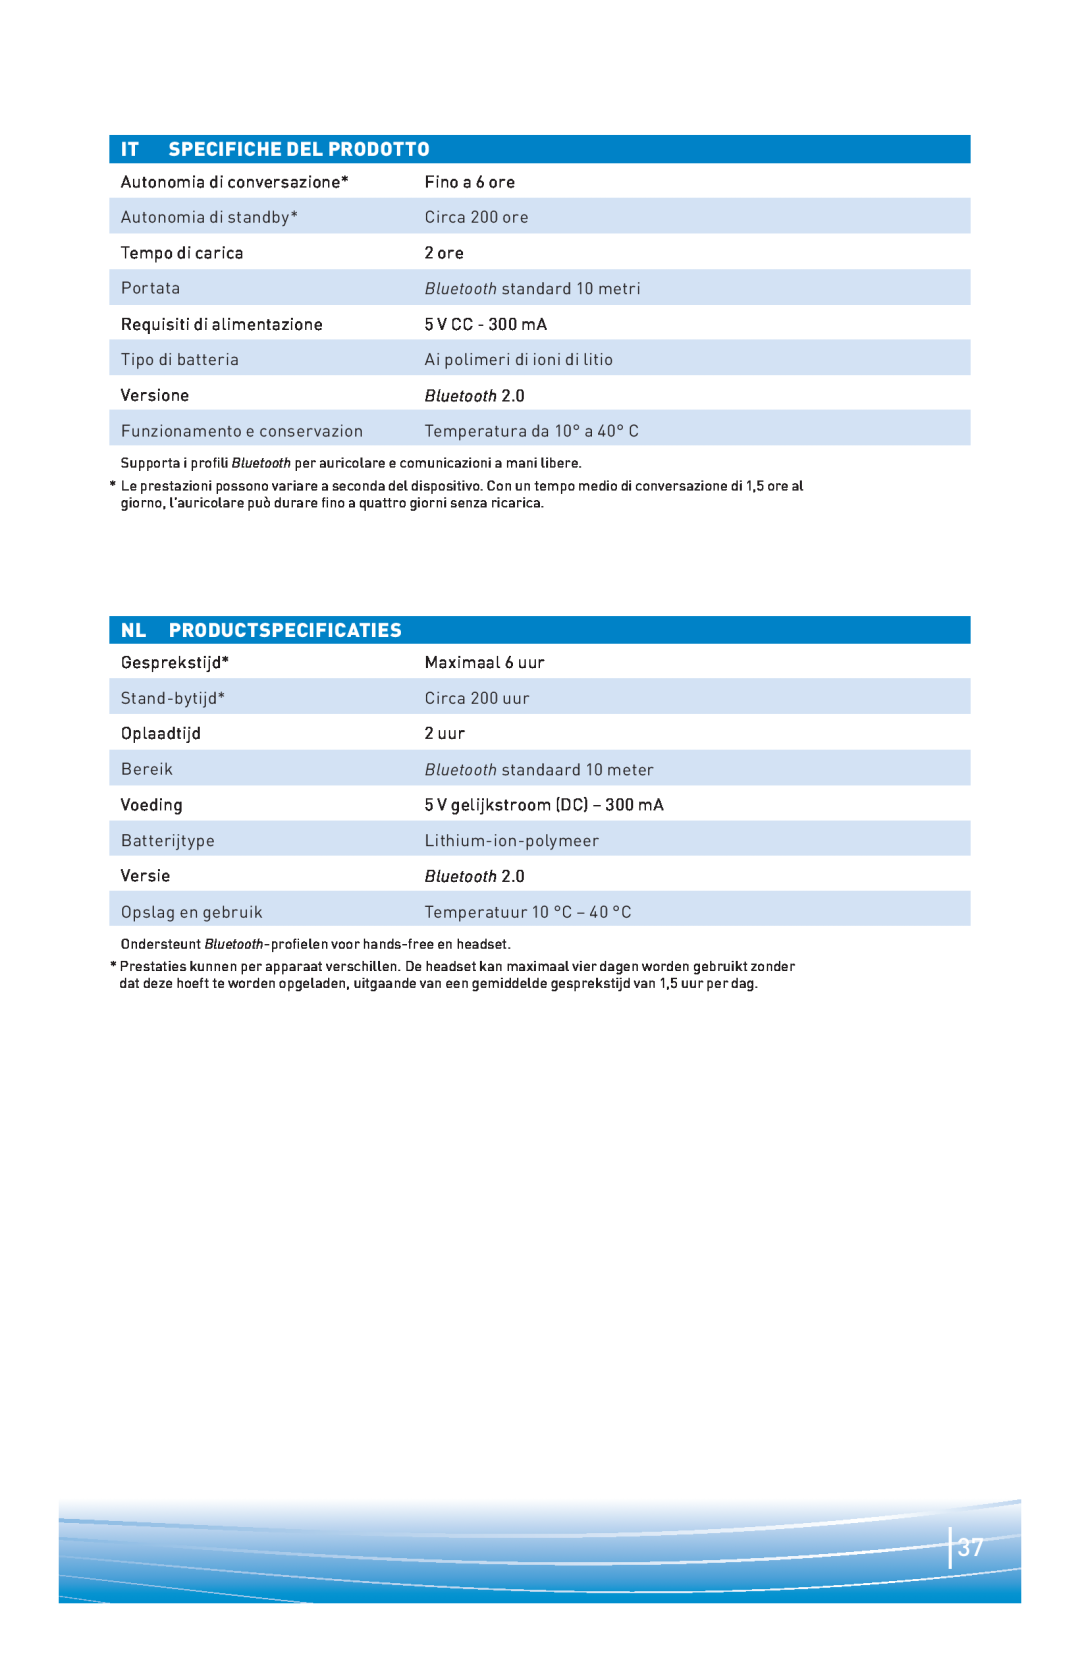 Plantronics 220 SERIES manual do utilizador It Specifiche Del Prodotto, Nl Productspecificaties, Bluetooth 